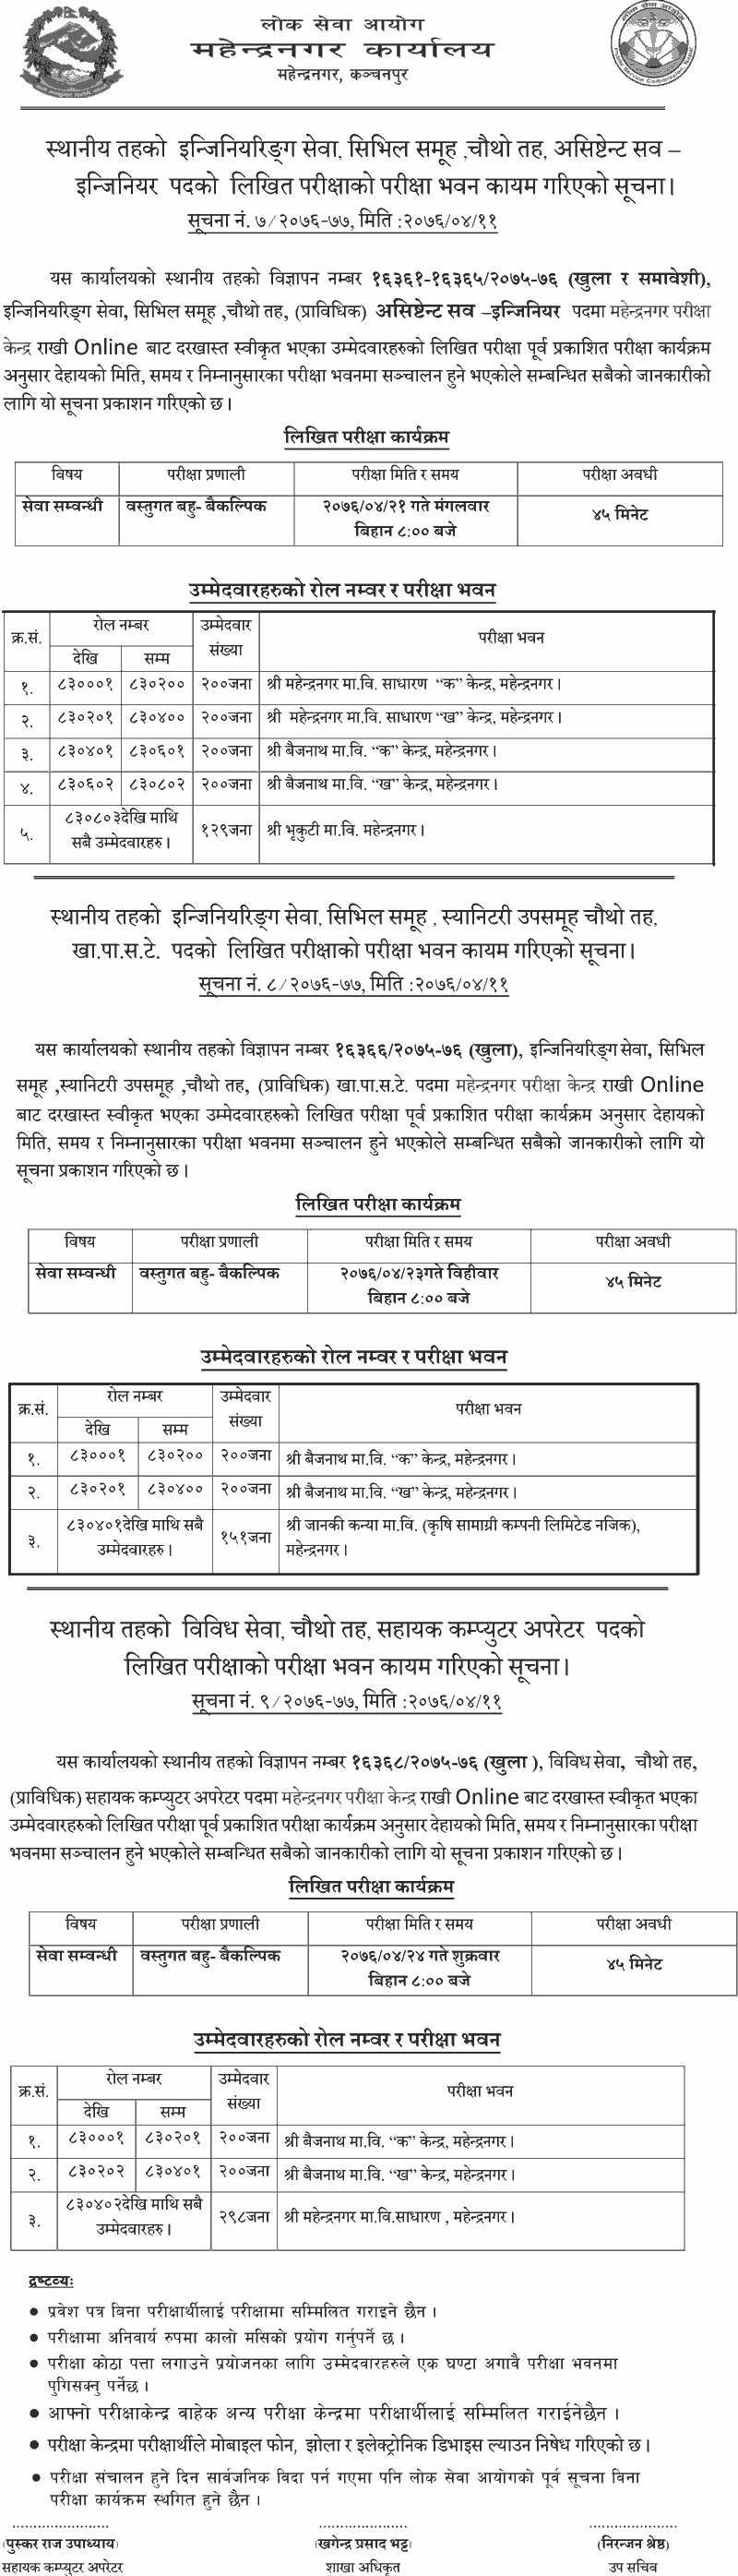 Local Level Technical 4th Level Engineering Written Examination - Mahendranagar